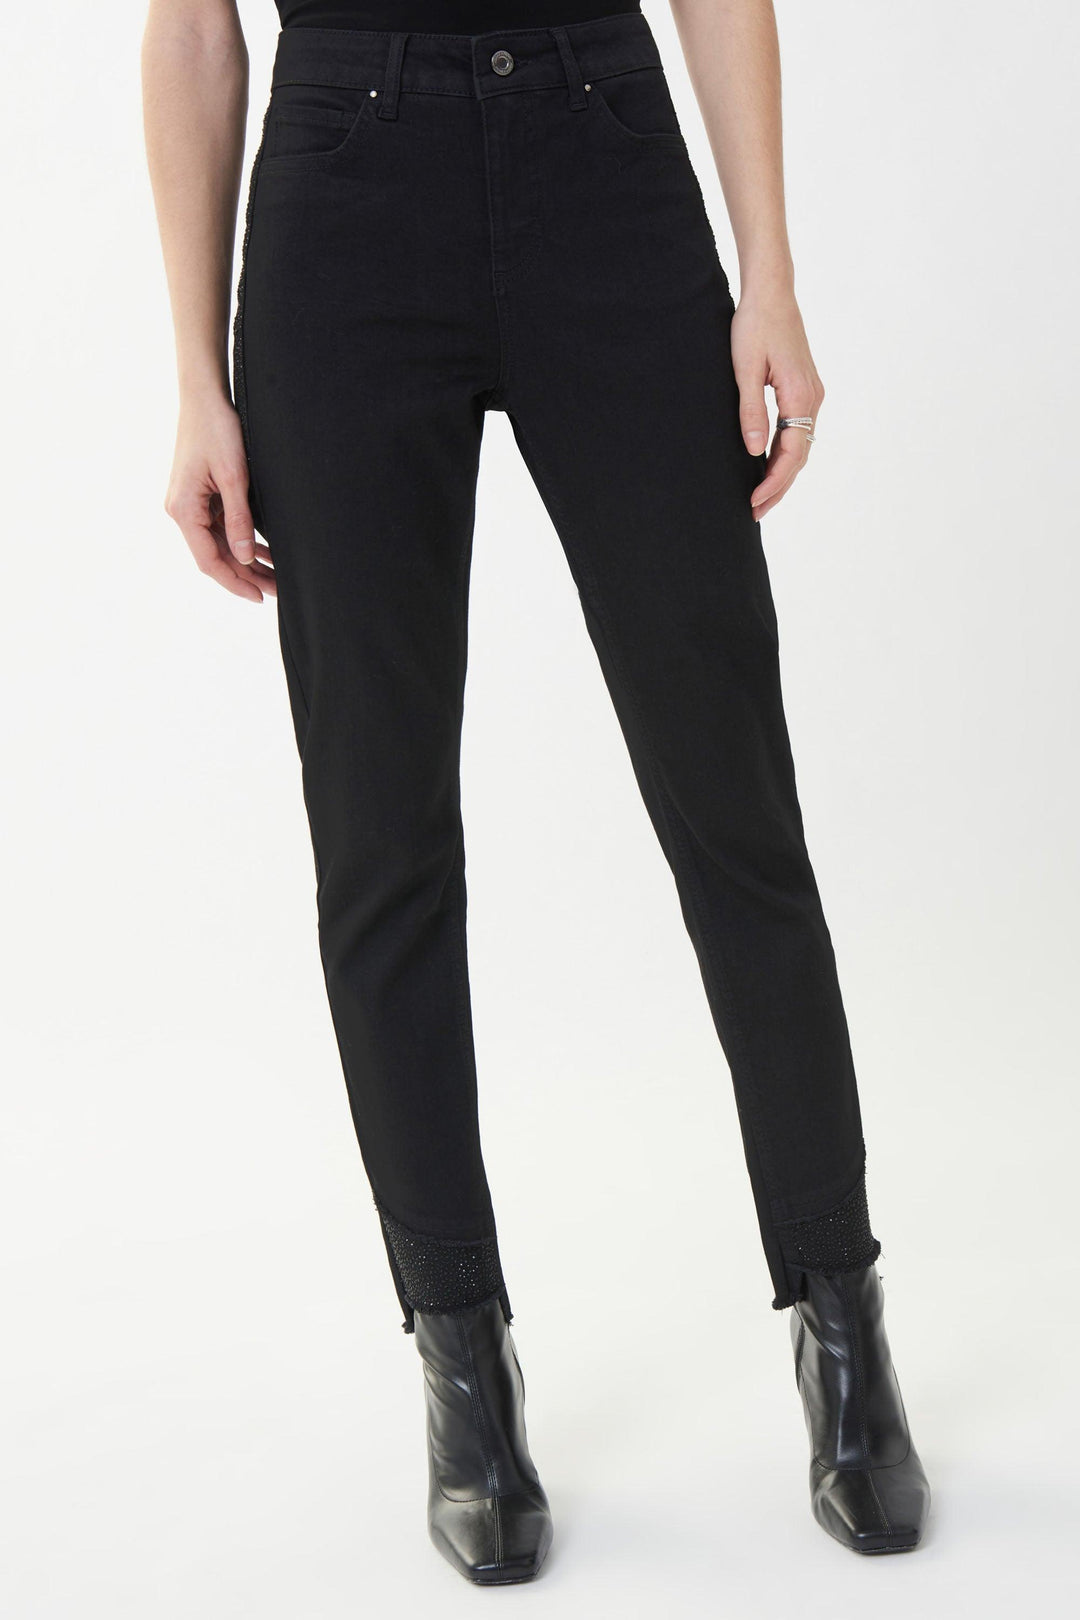 Joseph Ribkoff Black Trouser Style 223973 - Jeans AW22, Black, New, Trouser ginasmartboutique